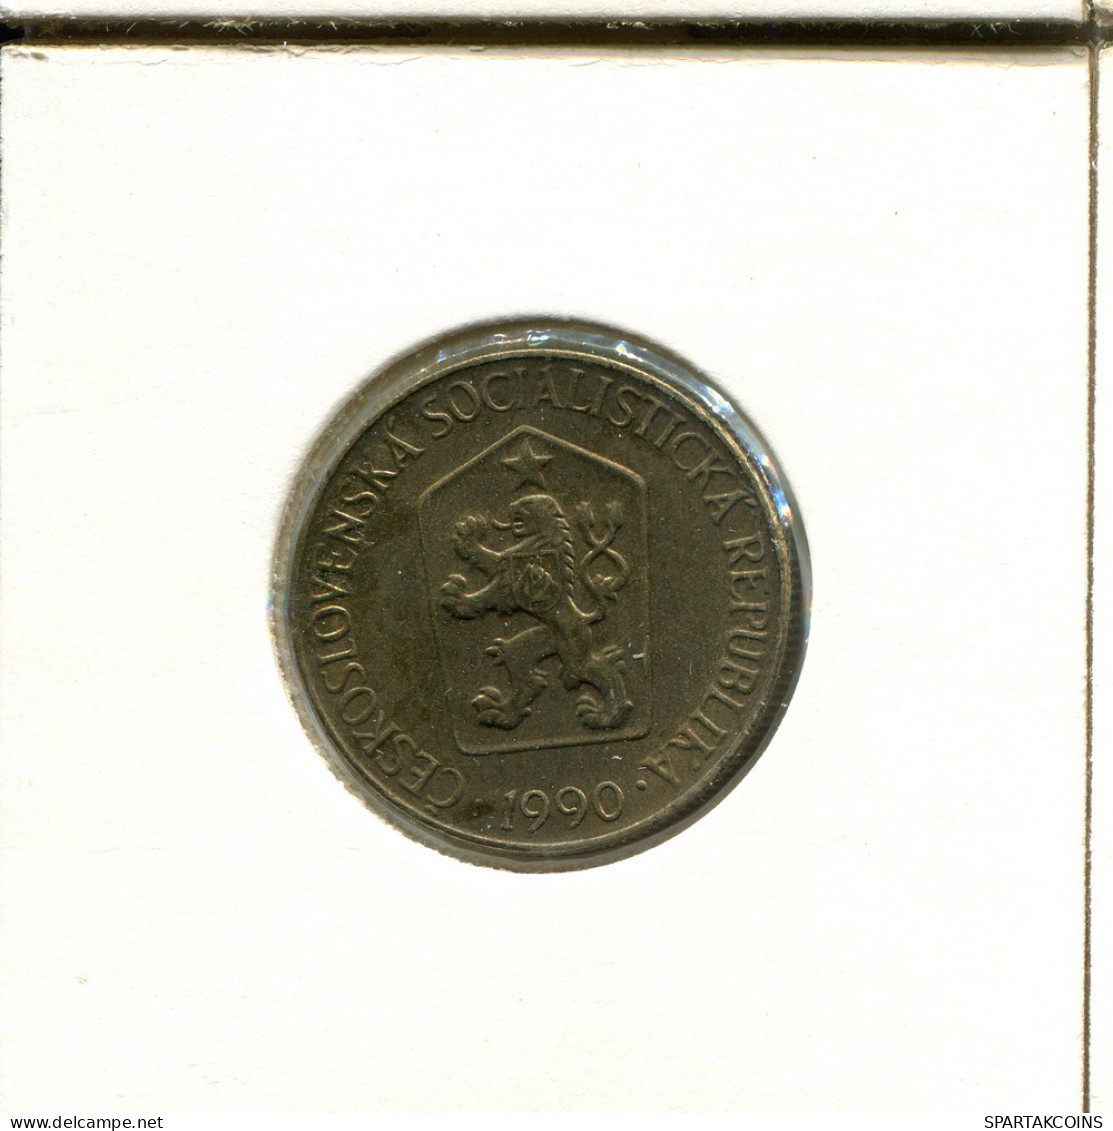 1 KORUNA 1990 CZECHOSLOVAKIA Coin #AS971.U.A - Tschechoslowakei